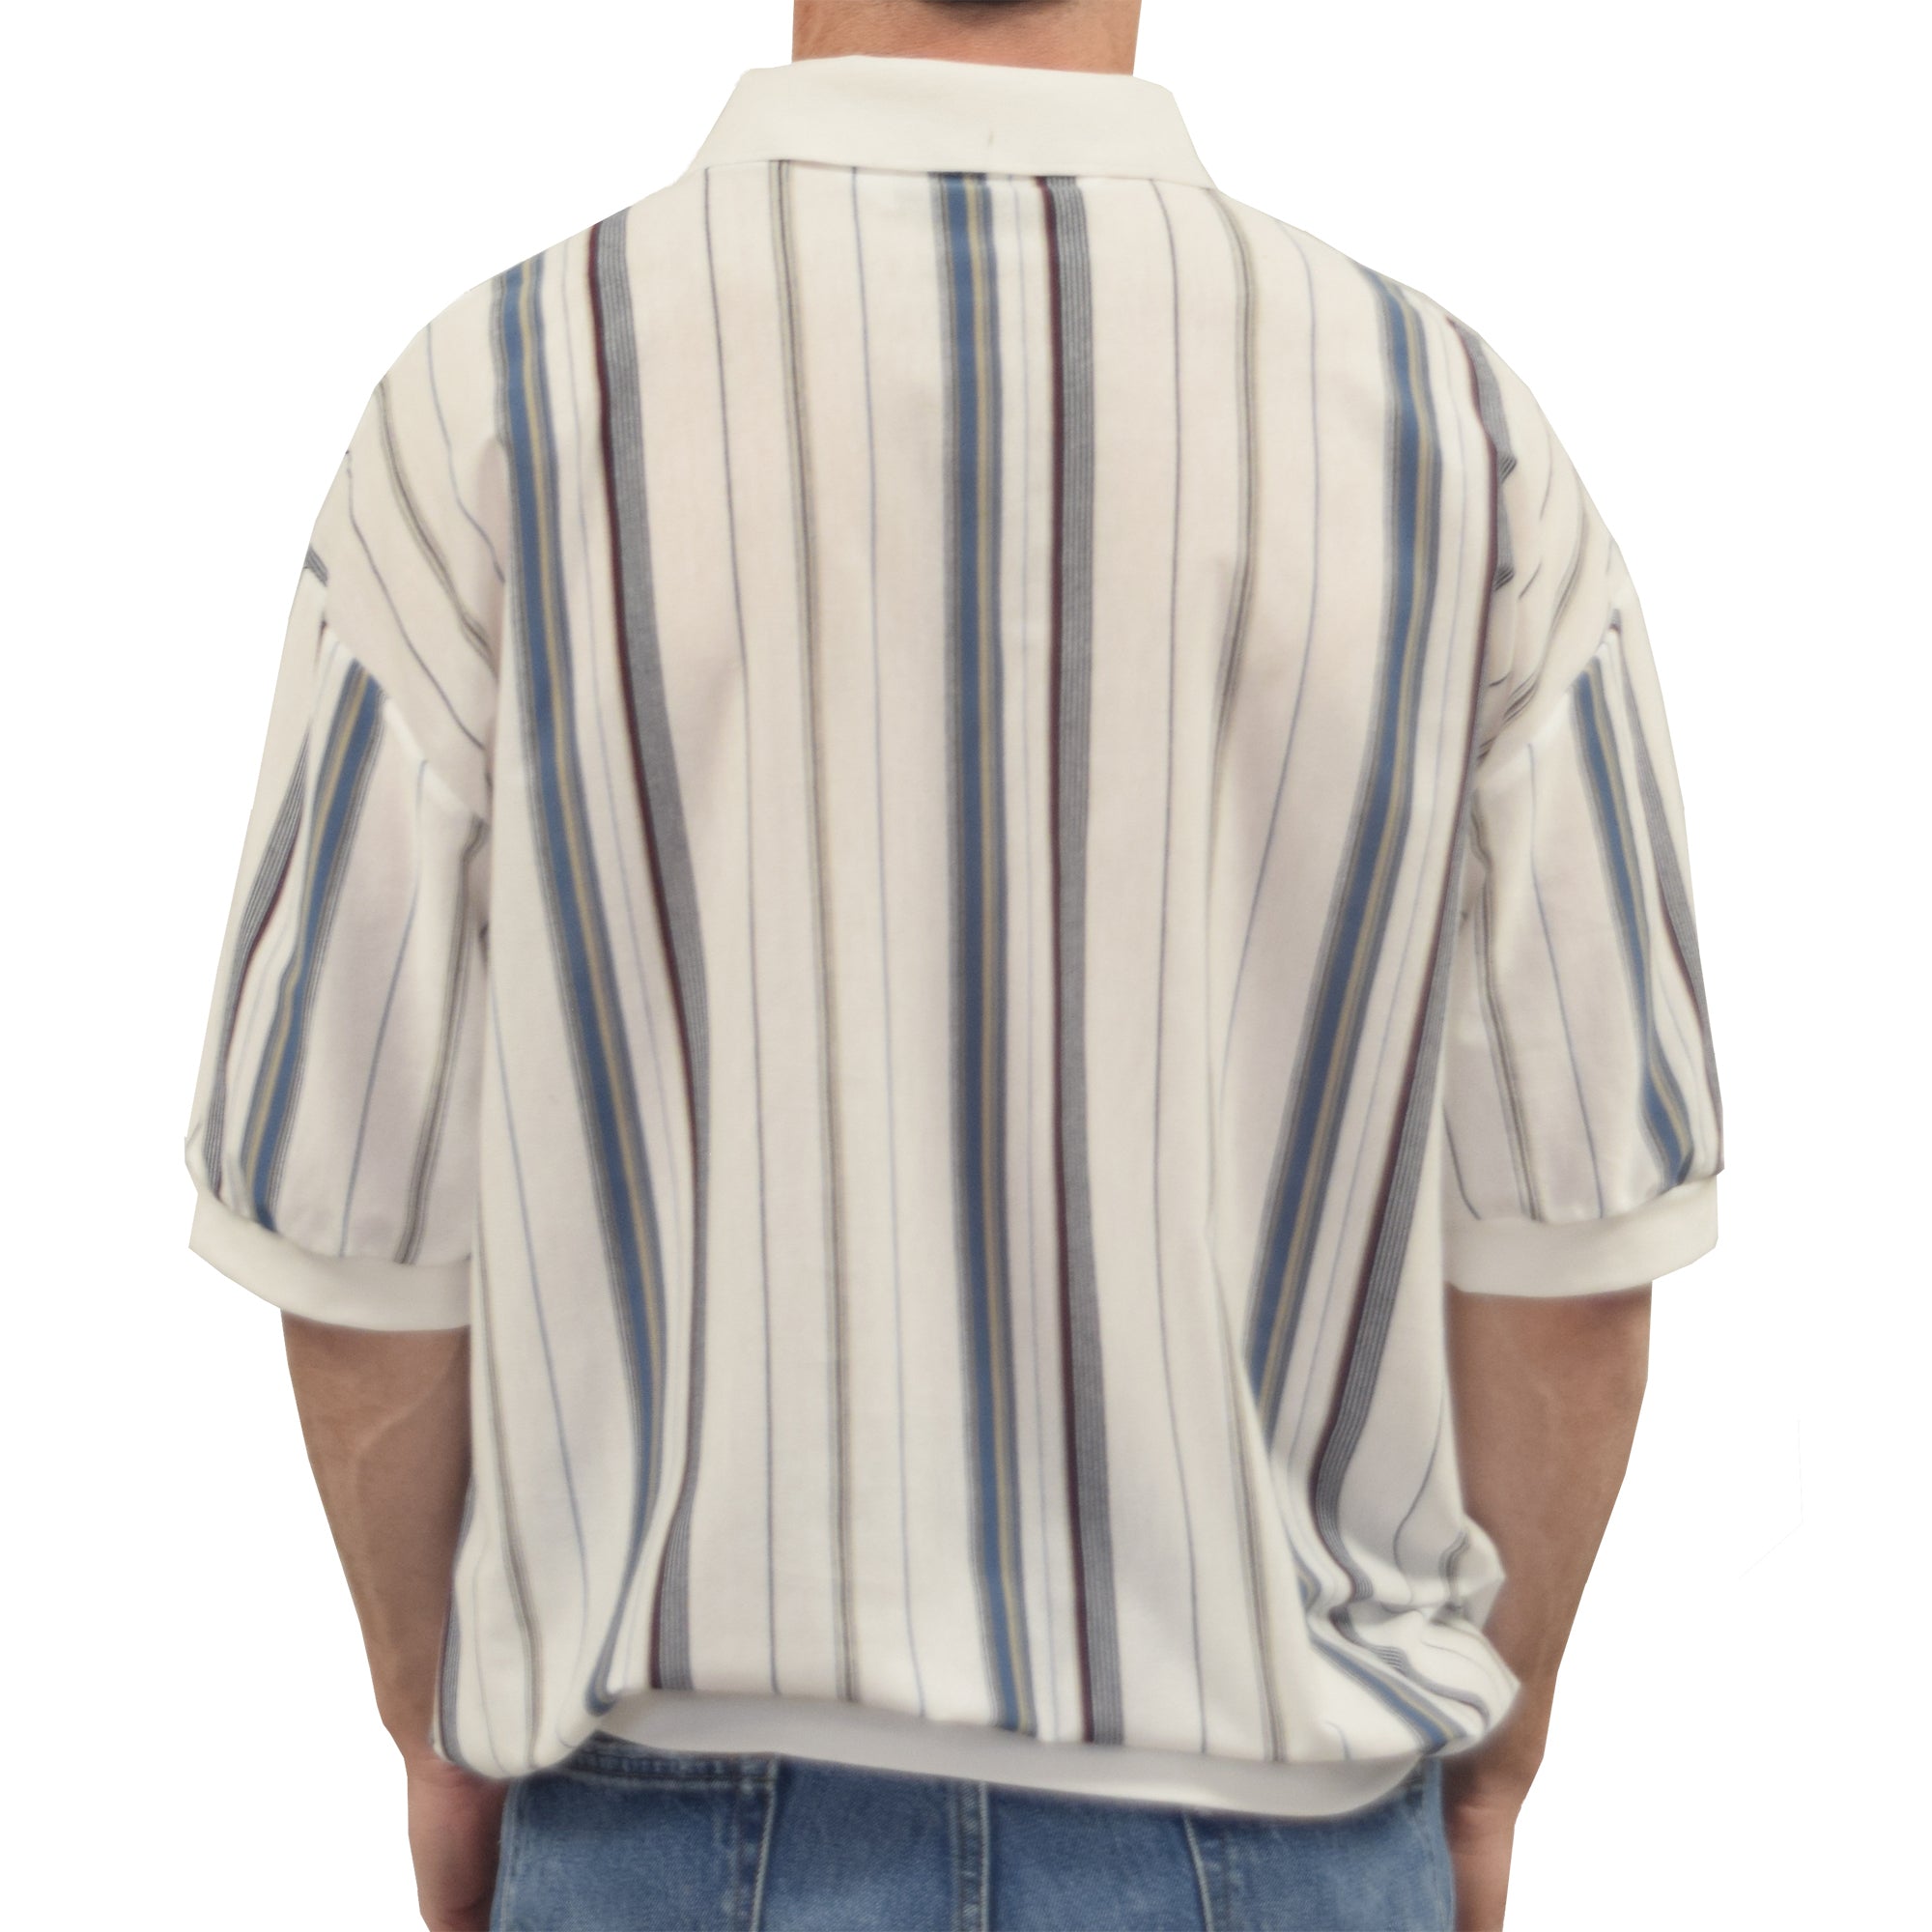 Classics By Palmland Vertical Short Sleeve Banded Bottom Shirt 6090-V1 White